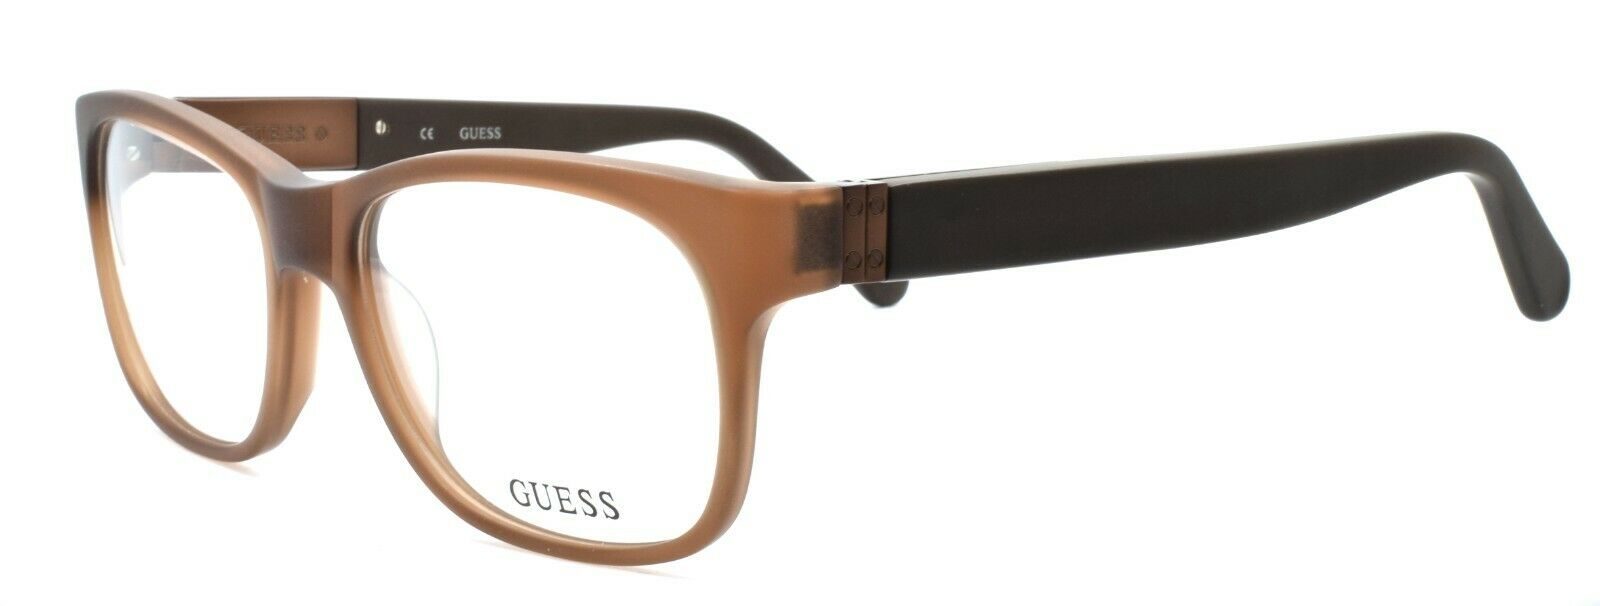 1-GUESS GU1811 MBRN Men's Eyeglasses Frames 53-17-140 Matte Brown + CASE-715583958555-IKSpecs